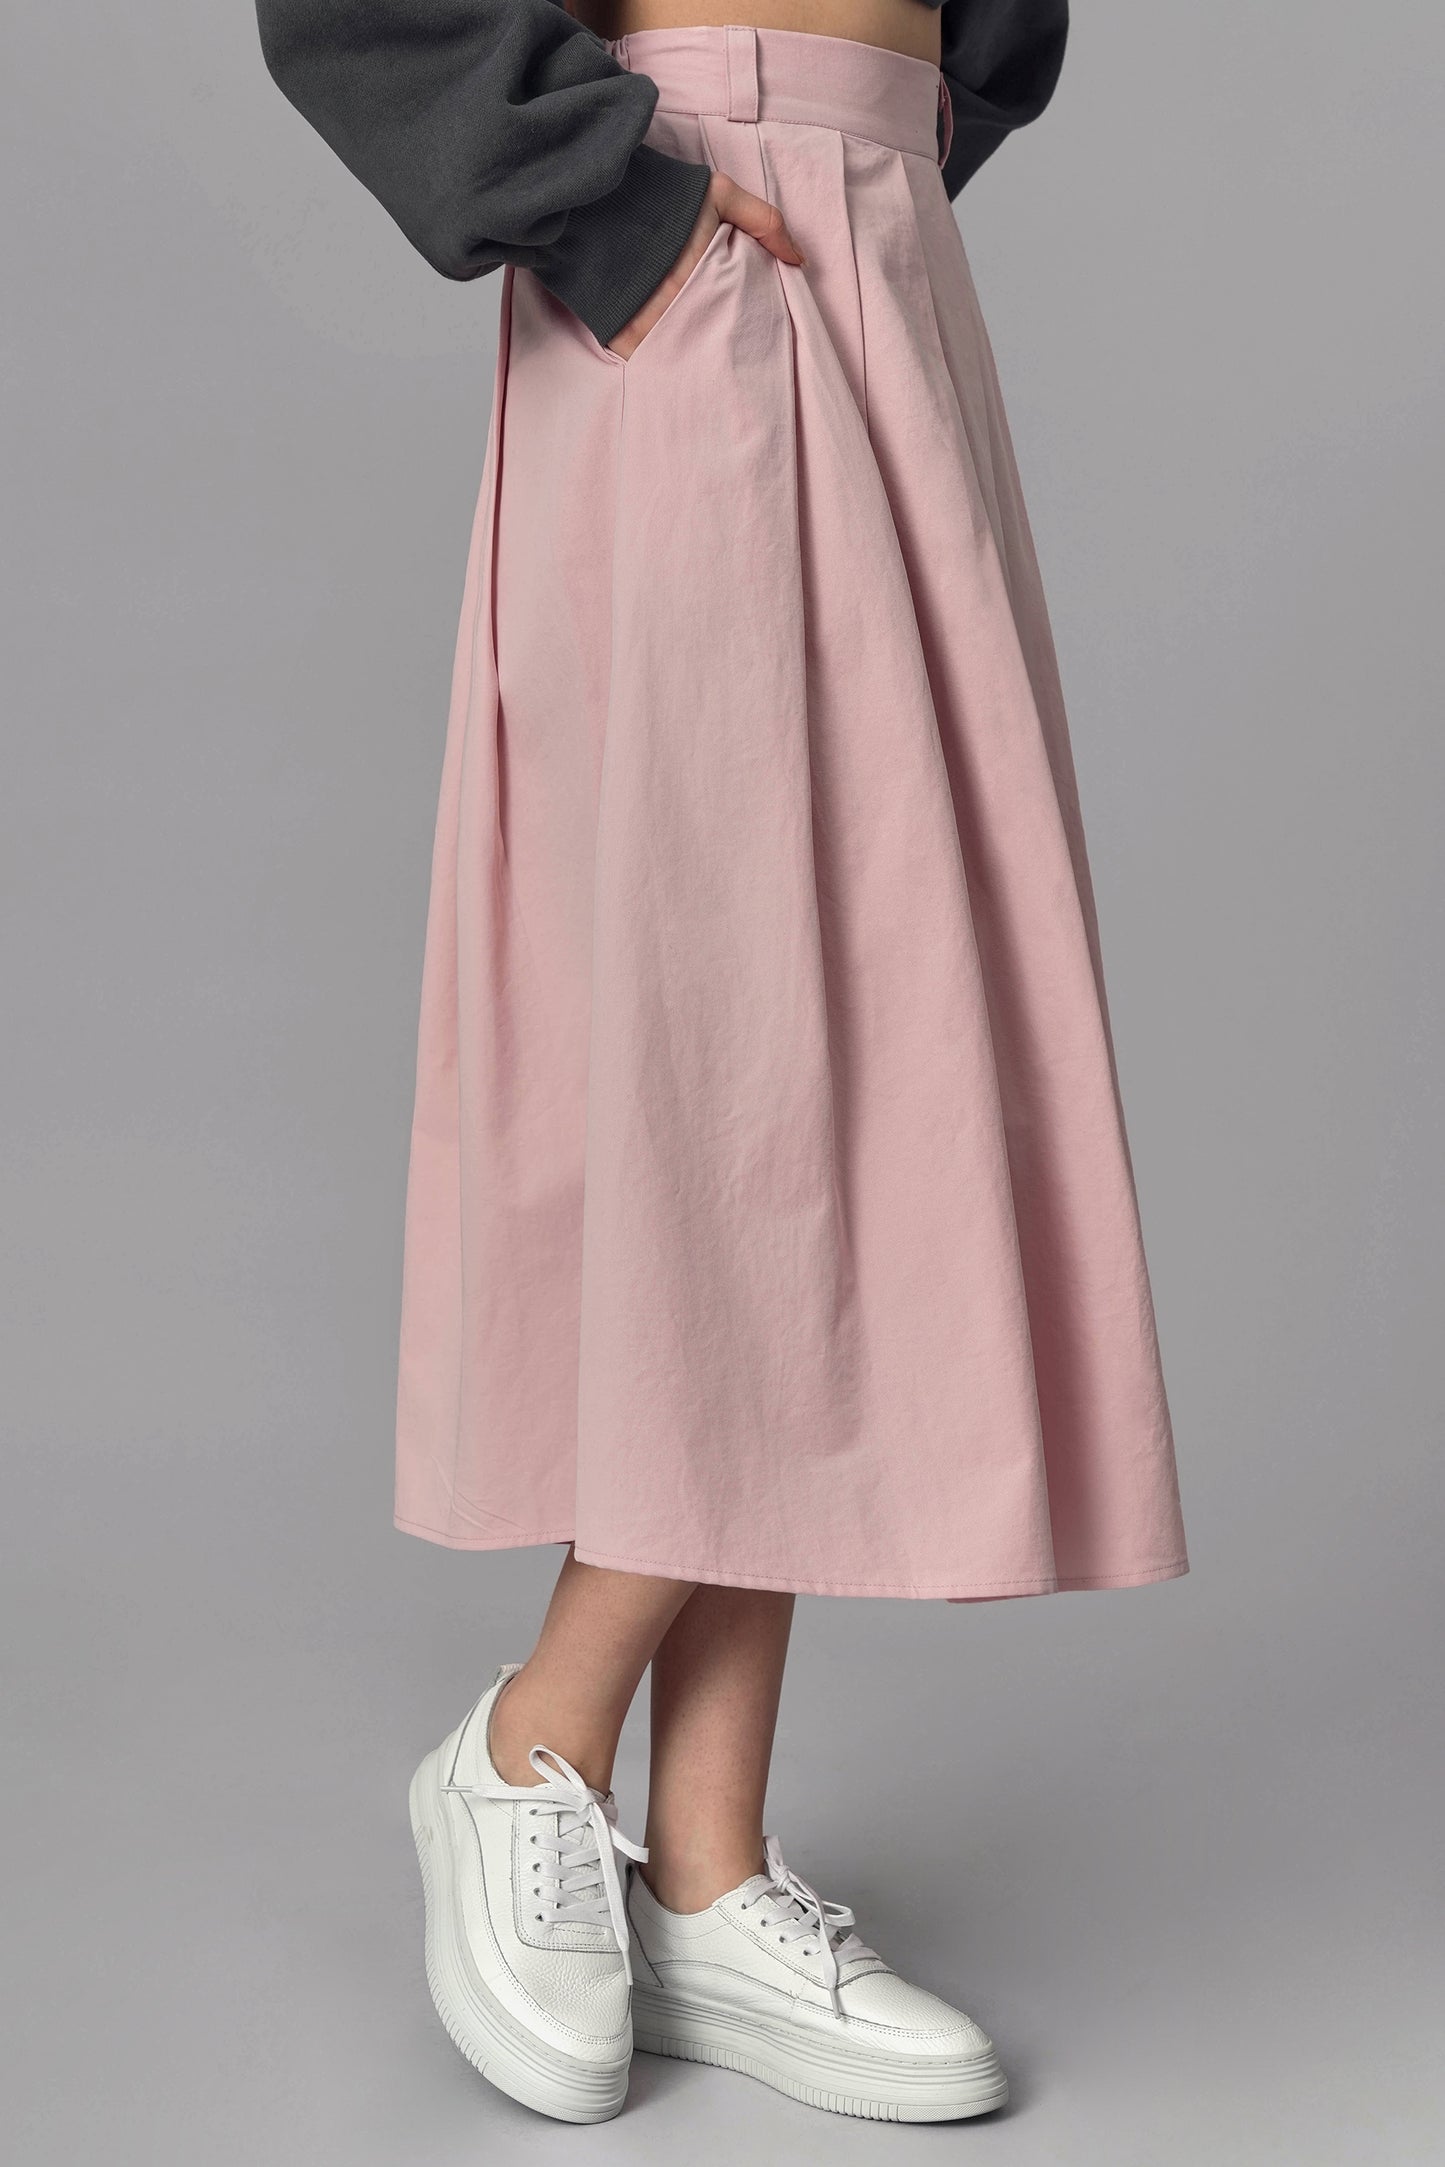 sally-pleated-maxi-skirt-pink